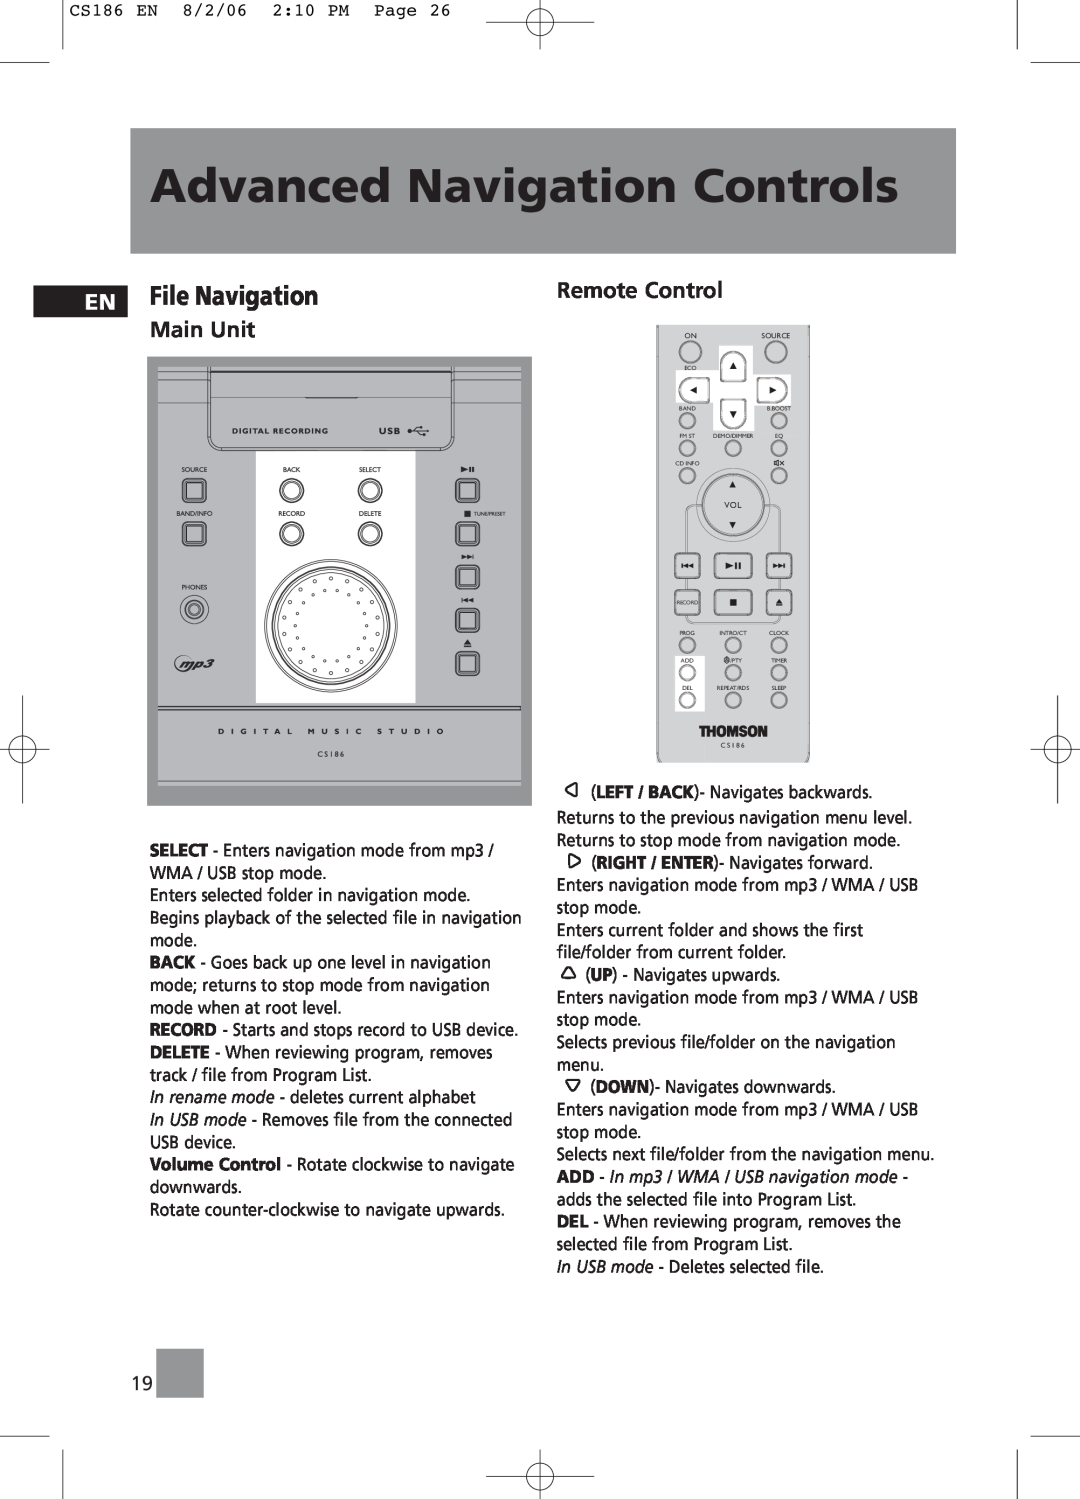 Technicolor - Thomson CS186 manual EN File Navigation, Main Unit, Remote Control, Advanced Navigation Controls 